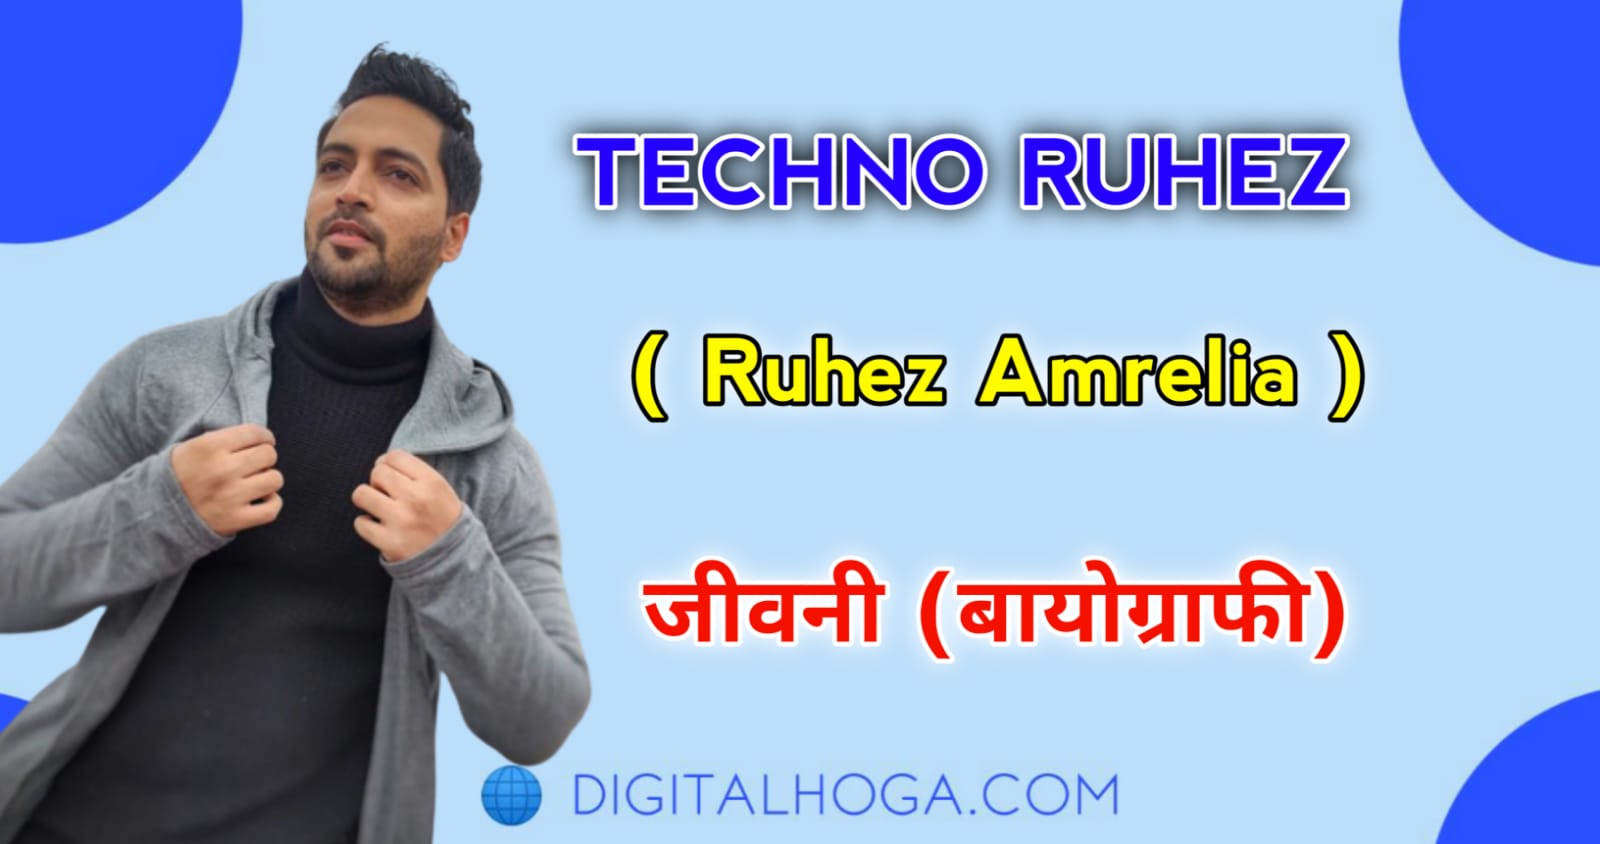 Techno Ruhez ( Ruhez Amrelia ) Biography In Hindi | Age, Profession, Height, Wife & Wiki